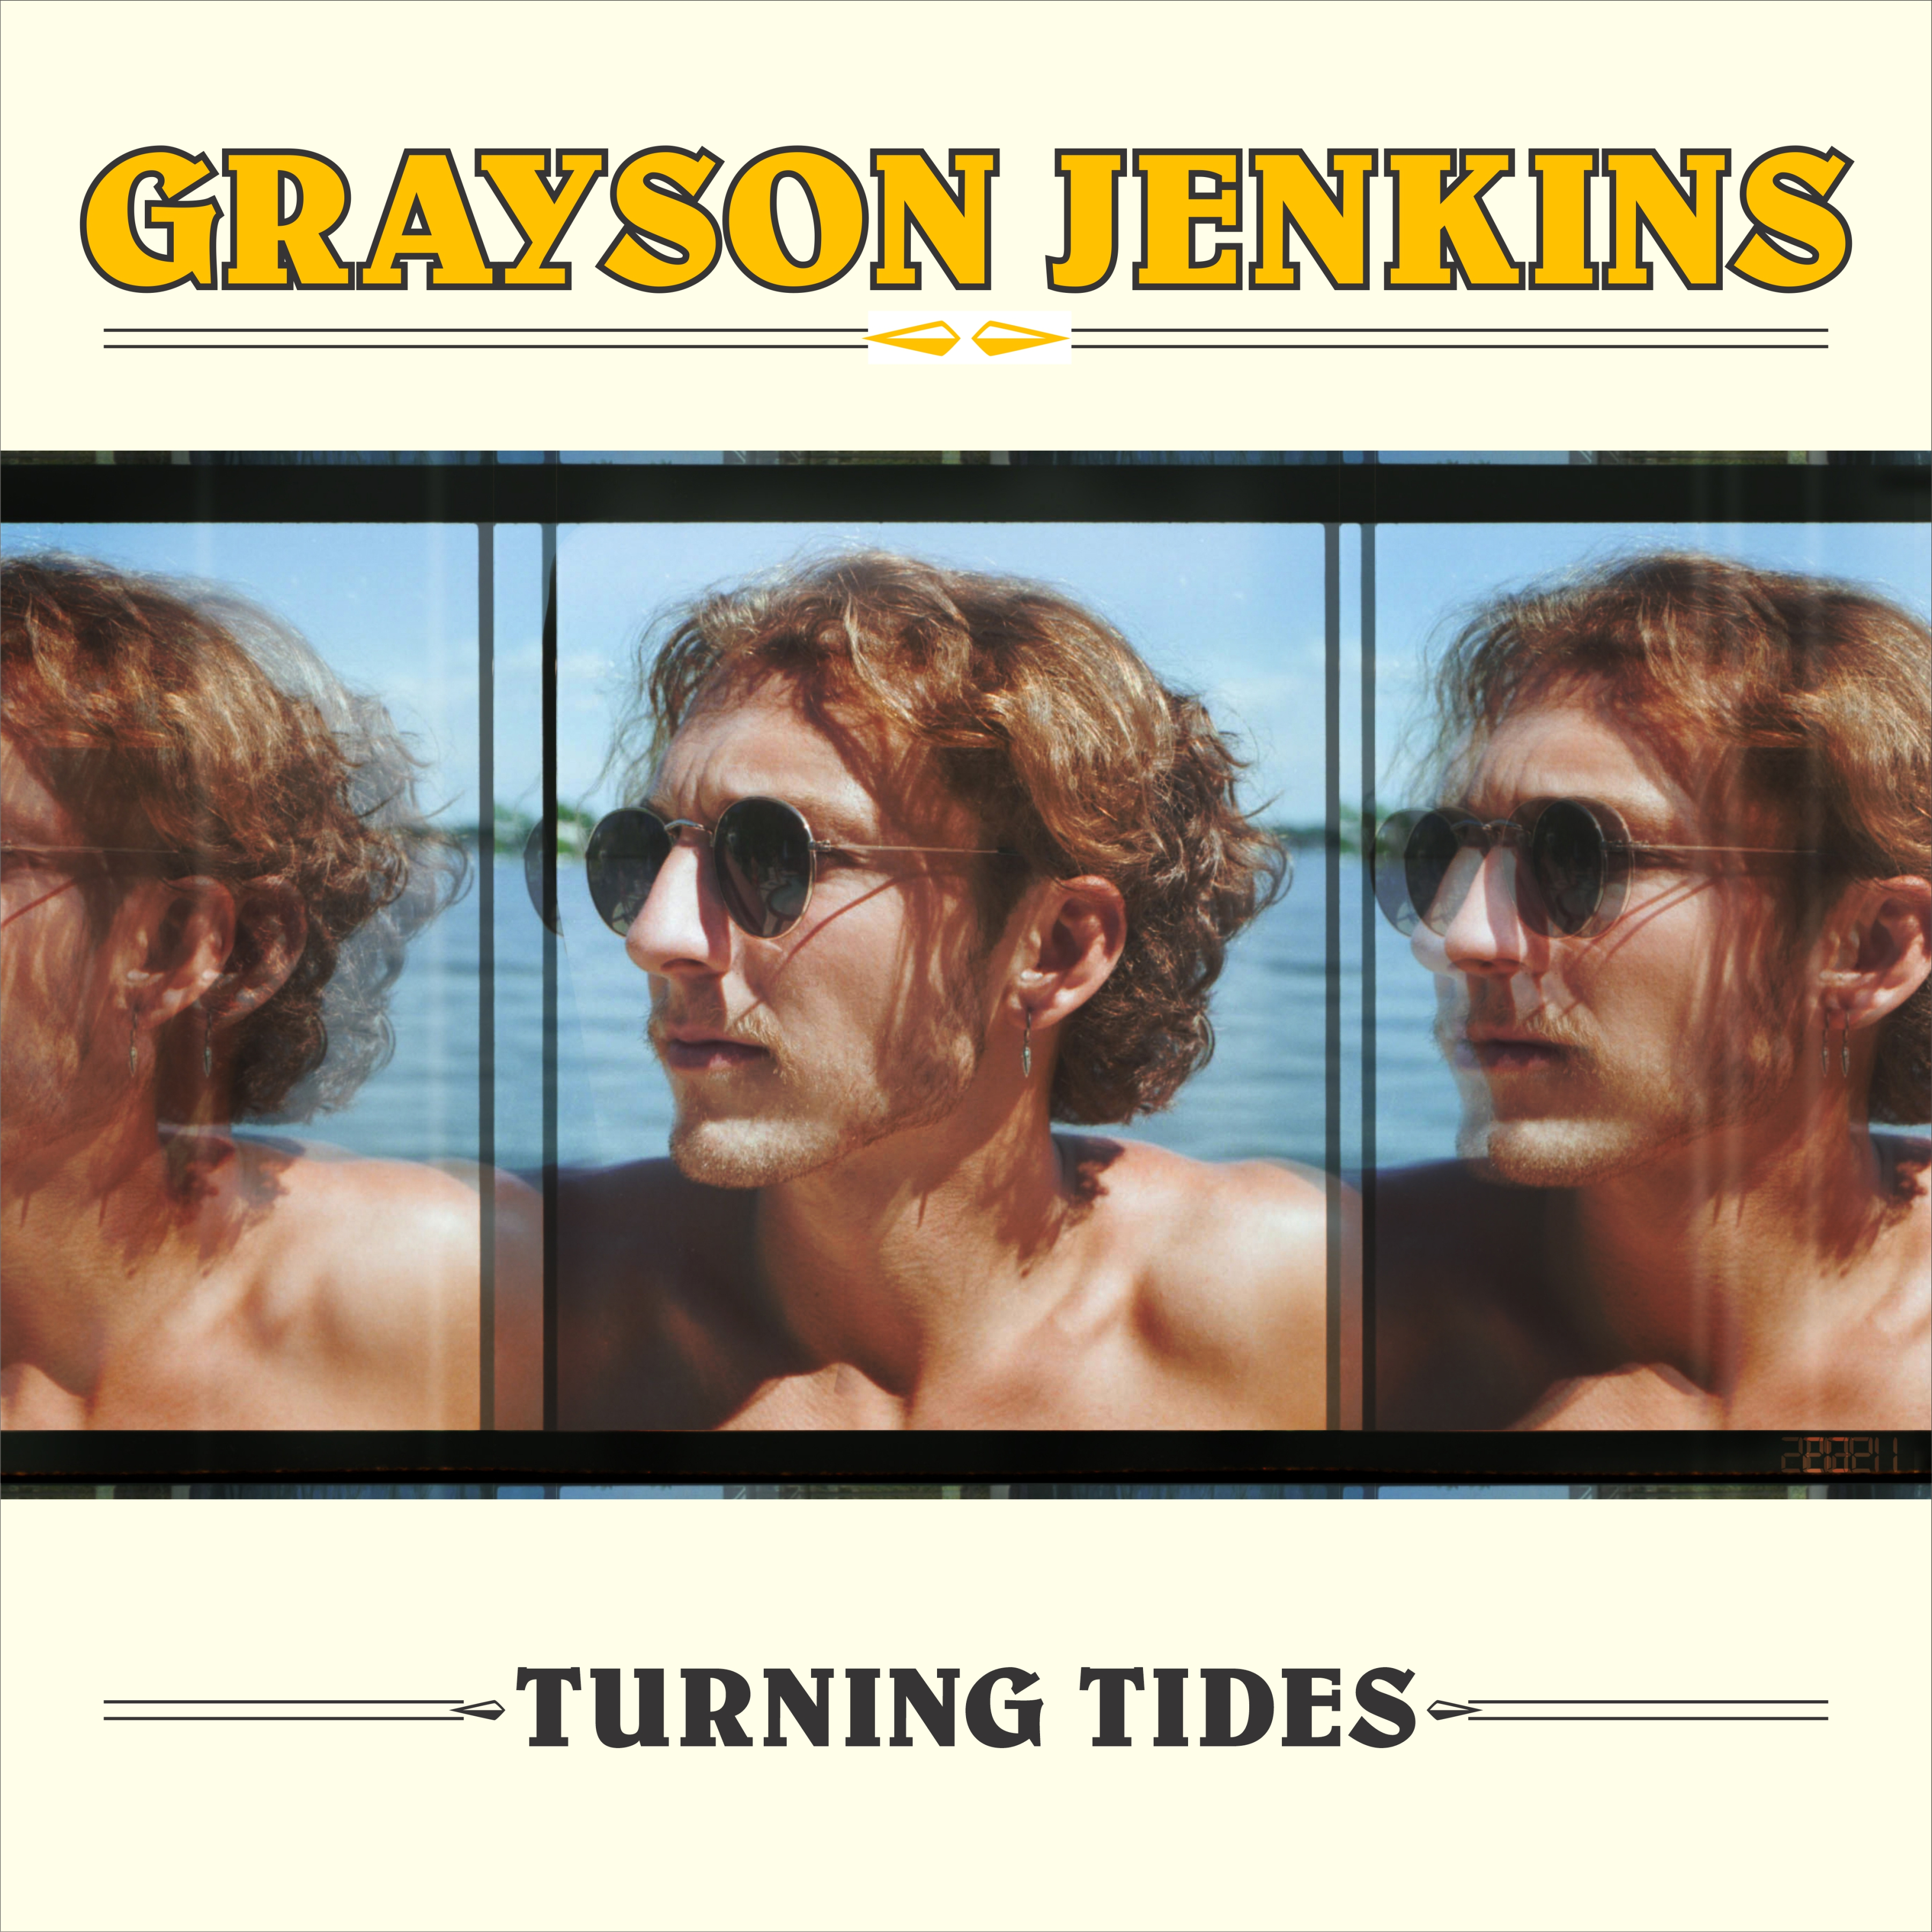 Grayson Jenkins - Turning Tides Album Cover